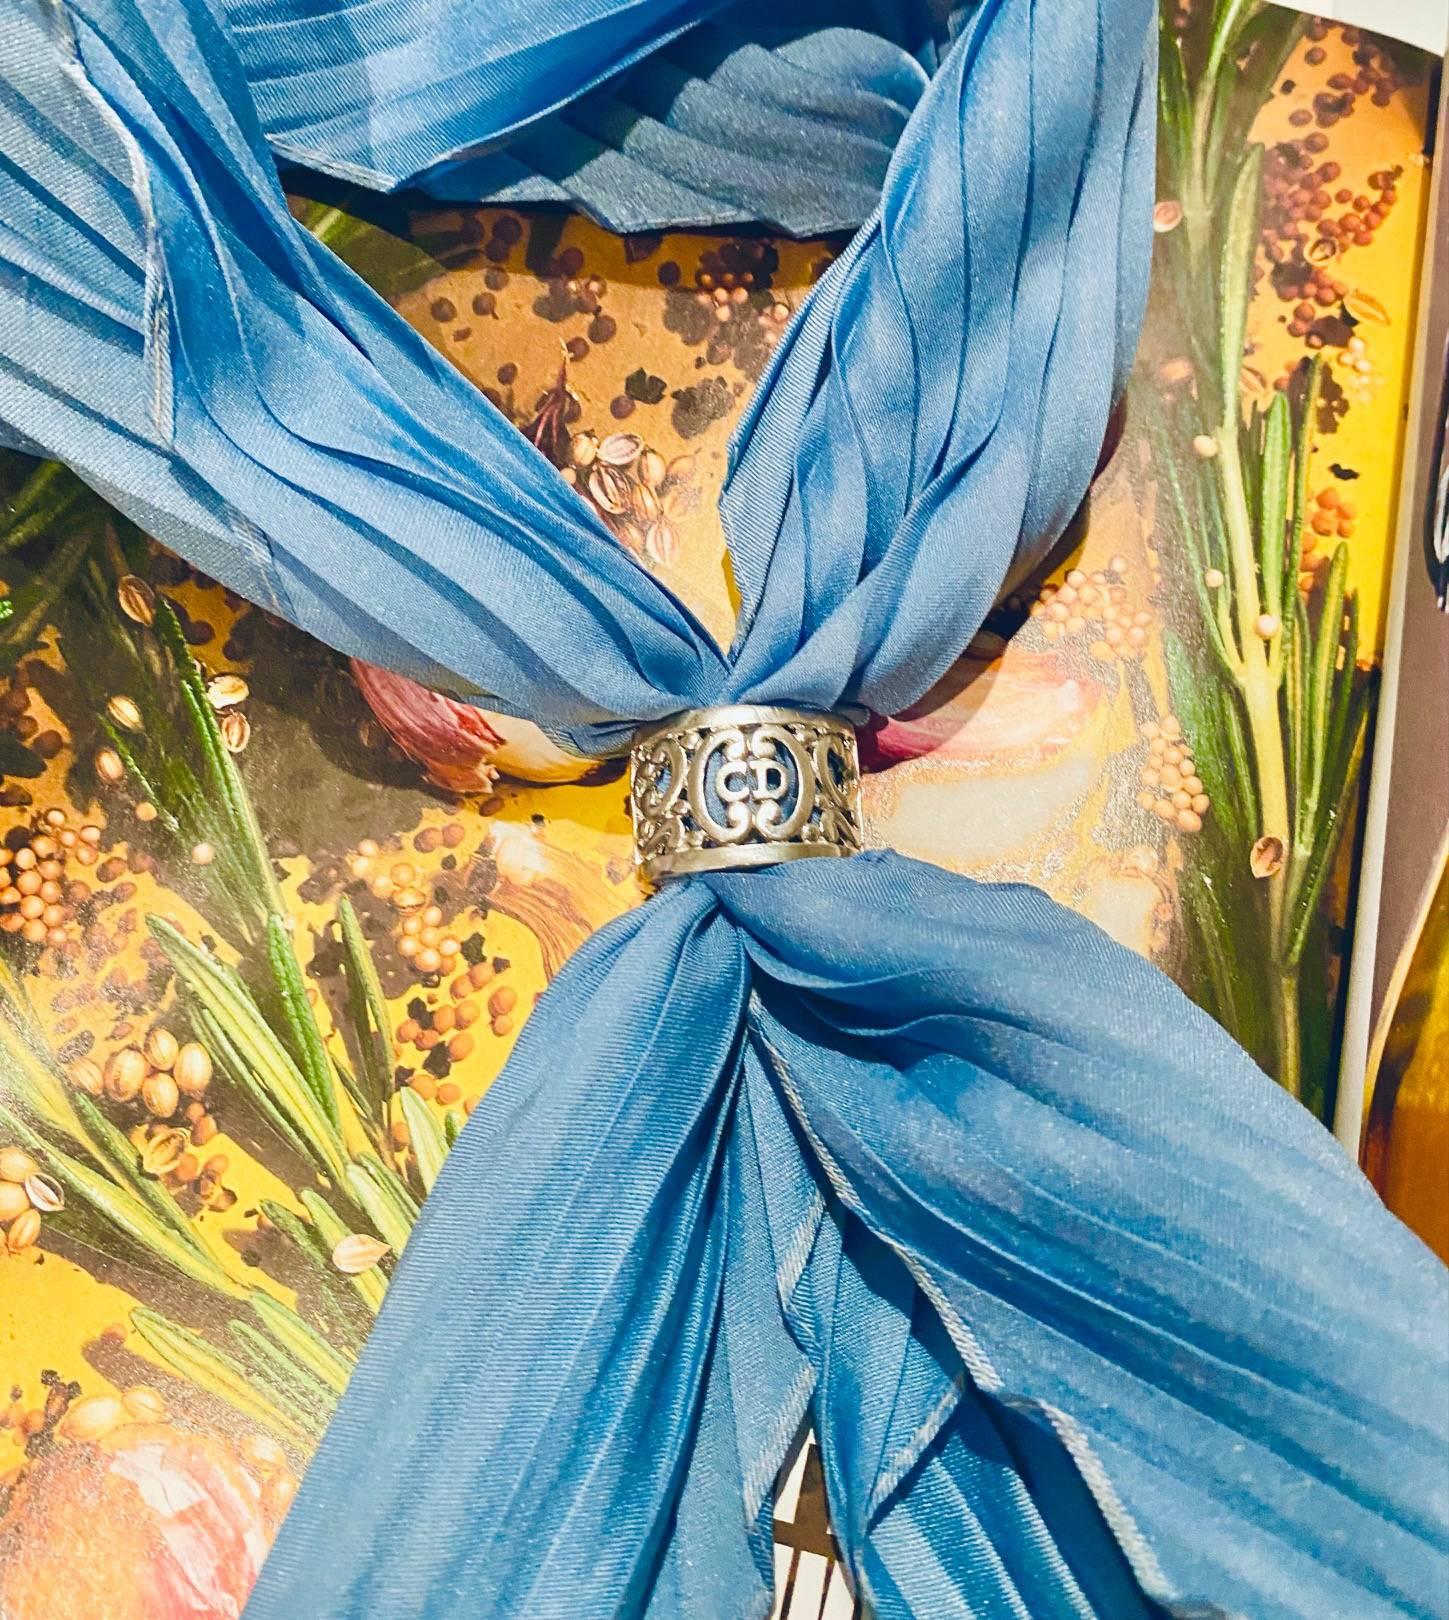 Christian Dior scarf, rhodium plated ring, Art Nouveau design

Dimensions:  2.8 x 1.9 x 1.9 cm, inner ca. 2 x 1.3 cm
Condition: 1980s, vintage, excellent 